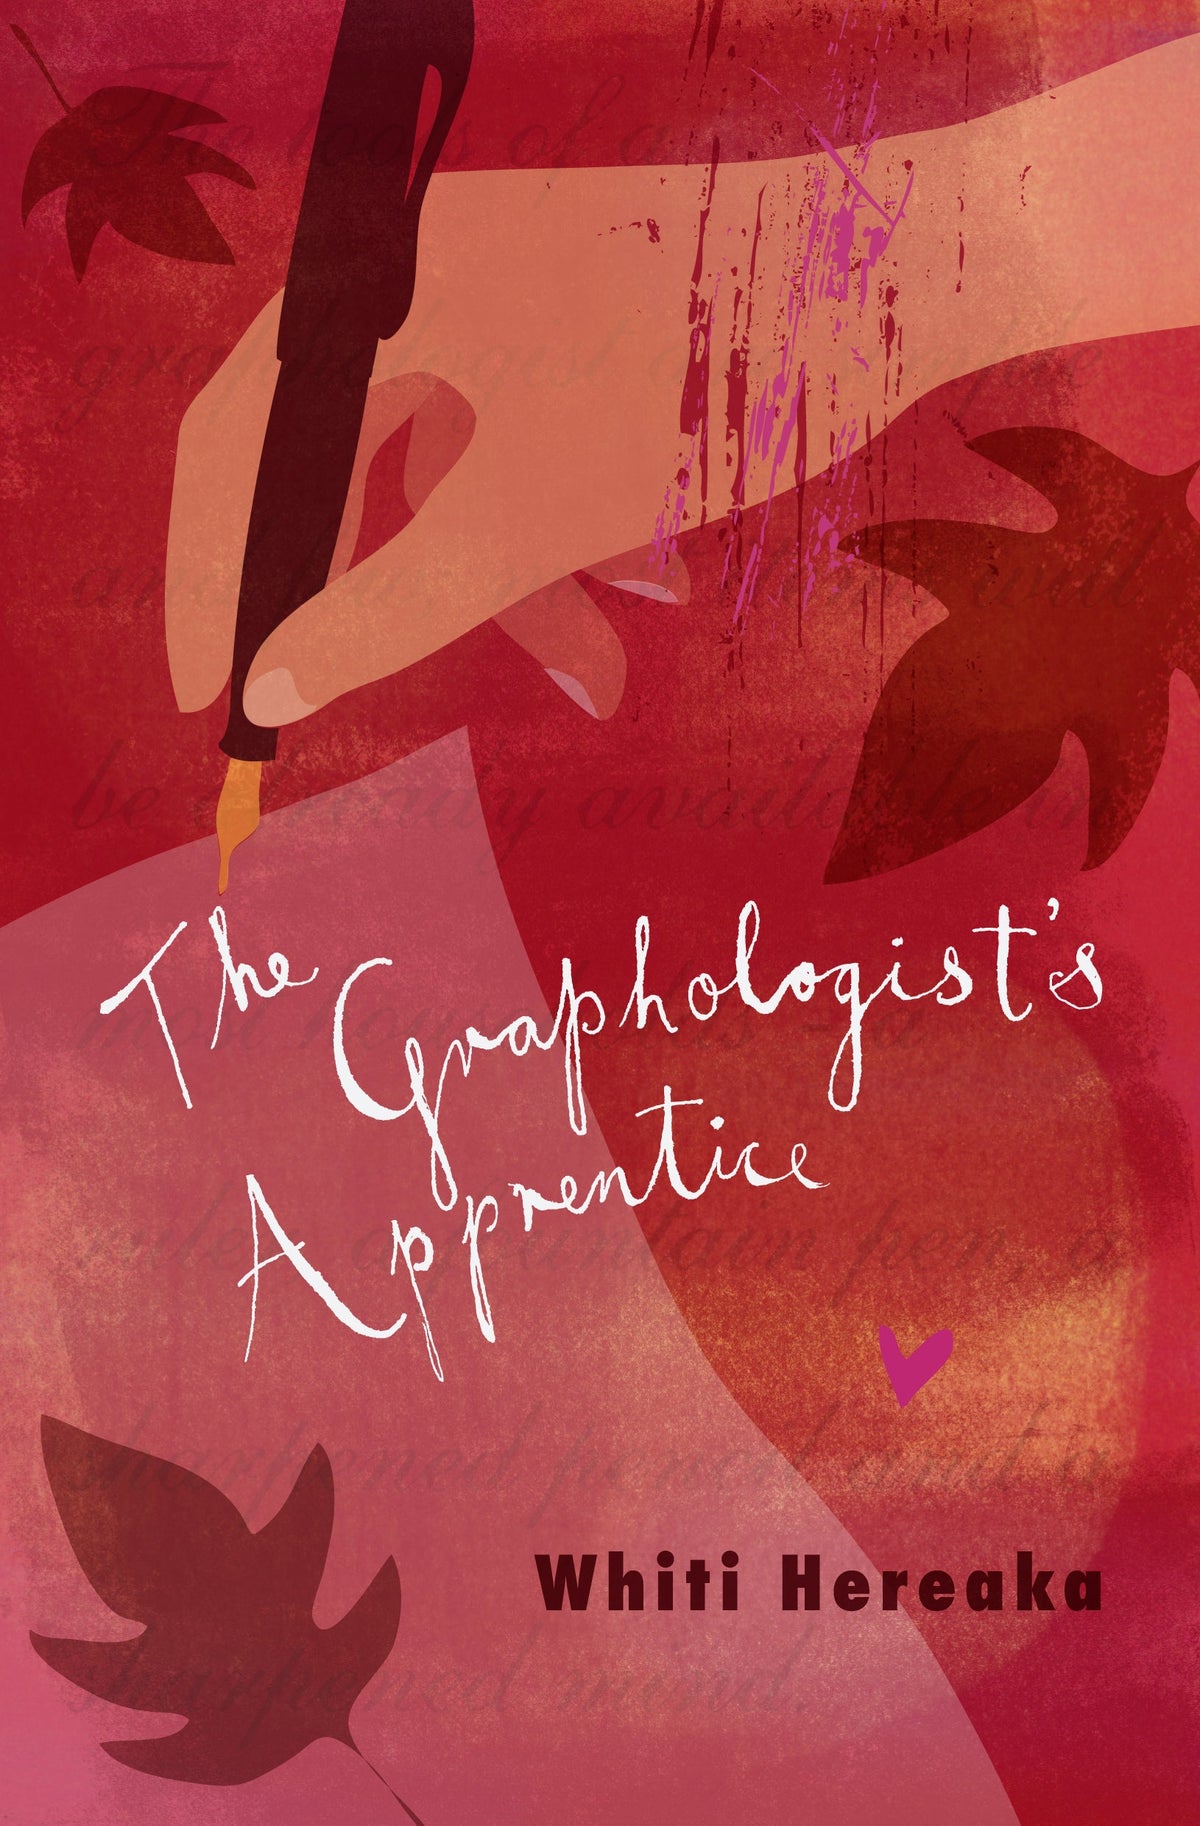 The Graphologist's Apprentice